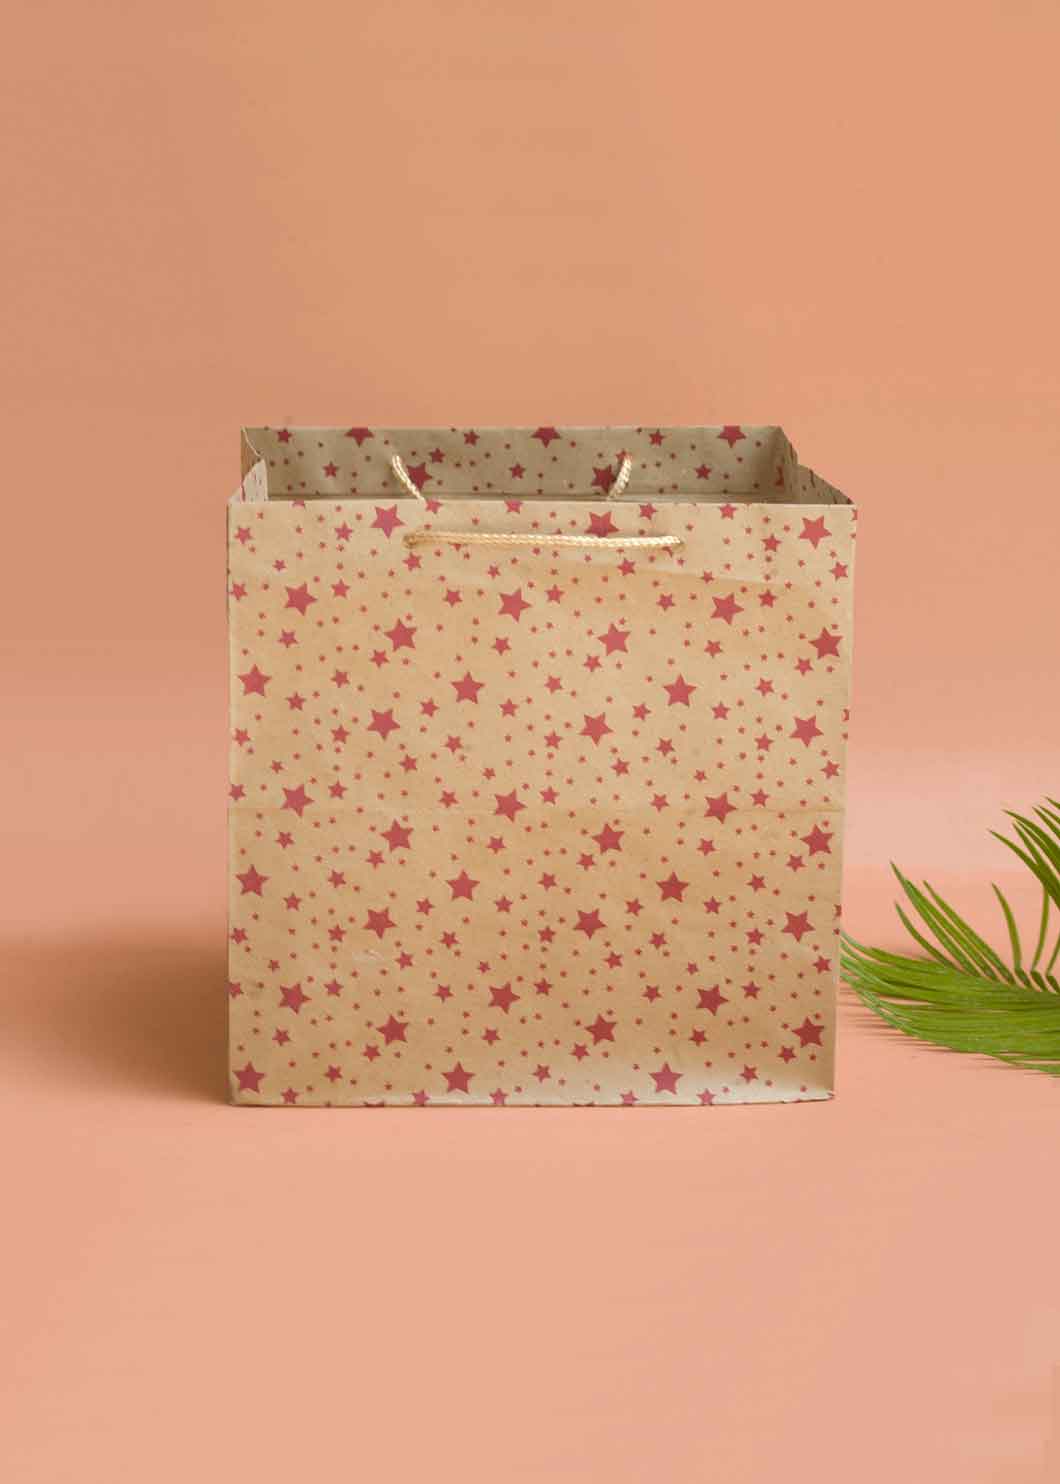 Craft Paper Bag - Star Pattern Design Square Paper Bag For Multupupose Packaging